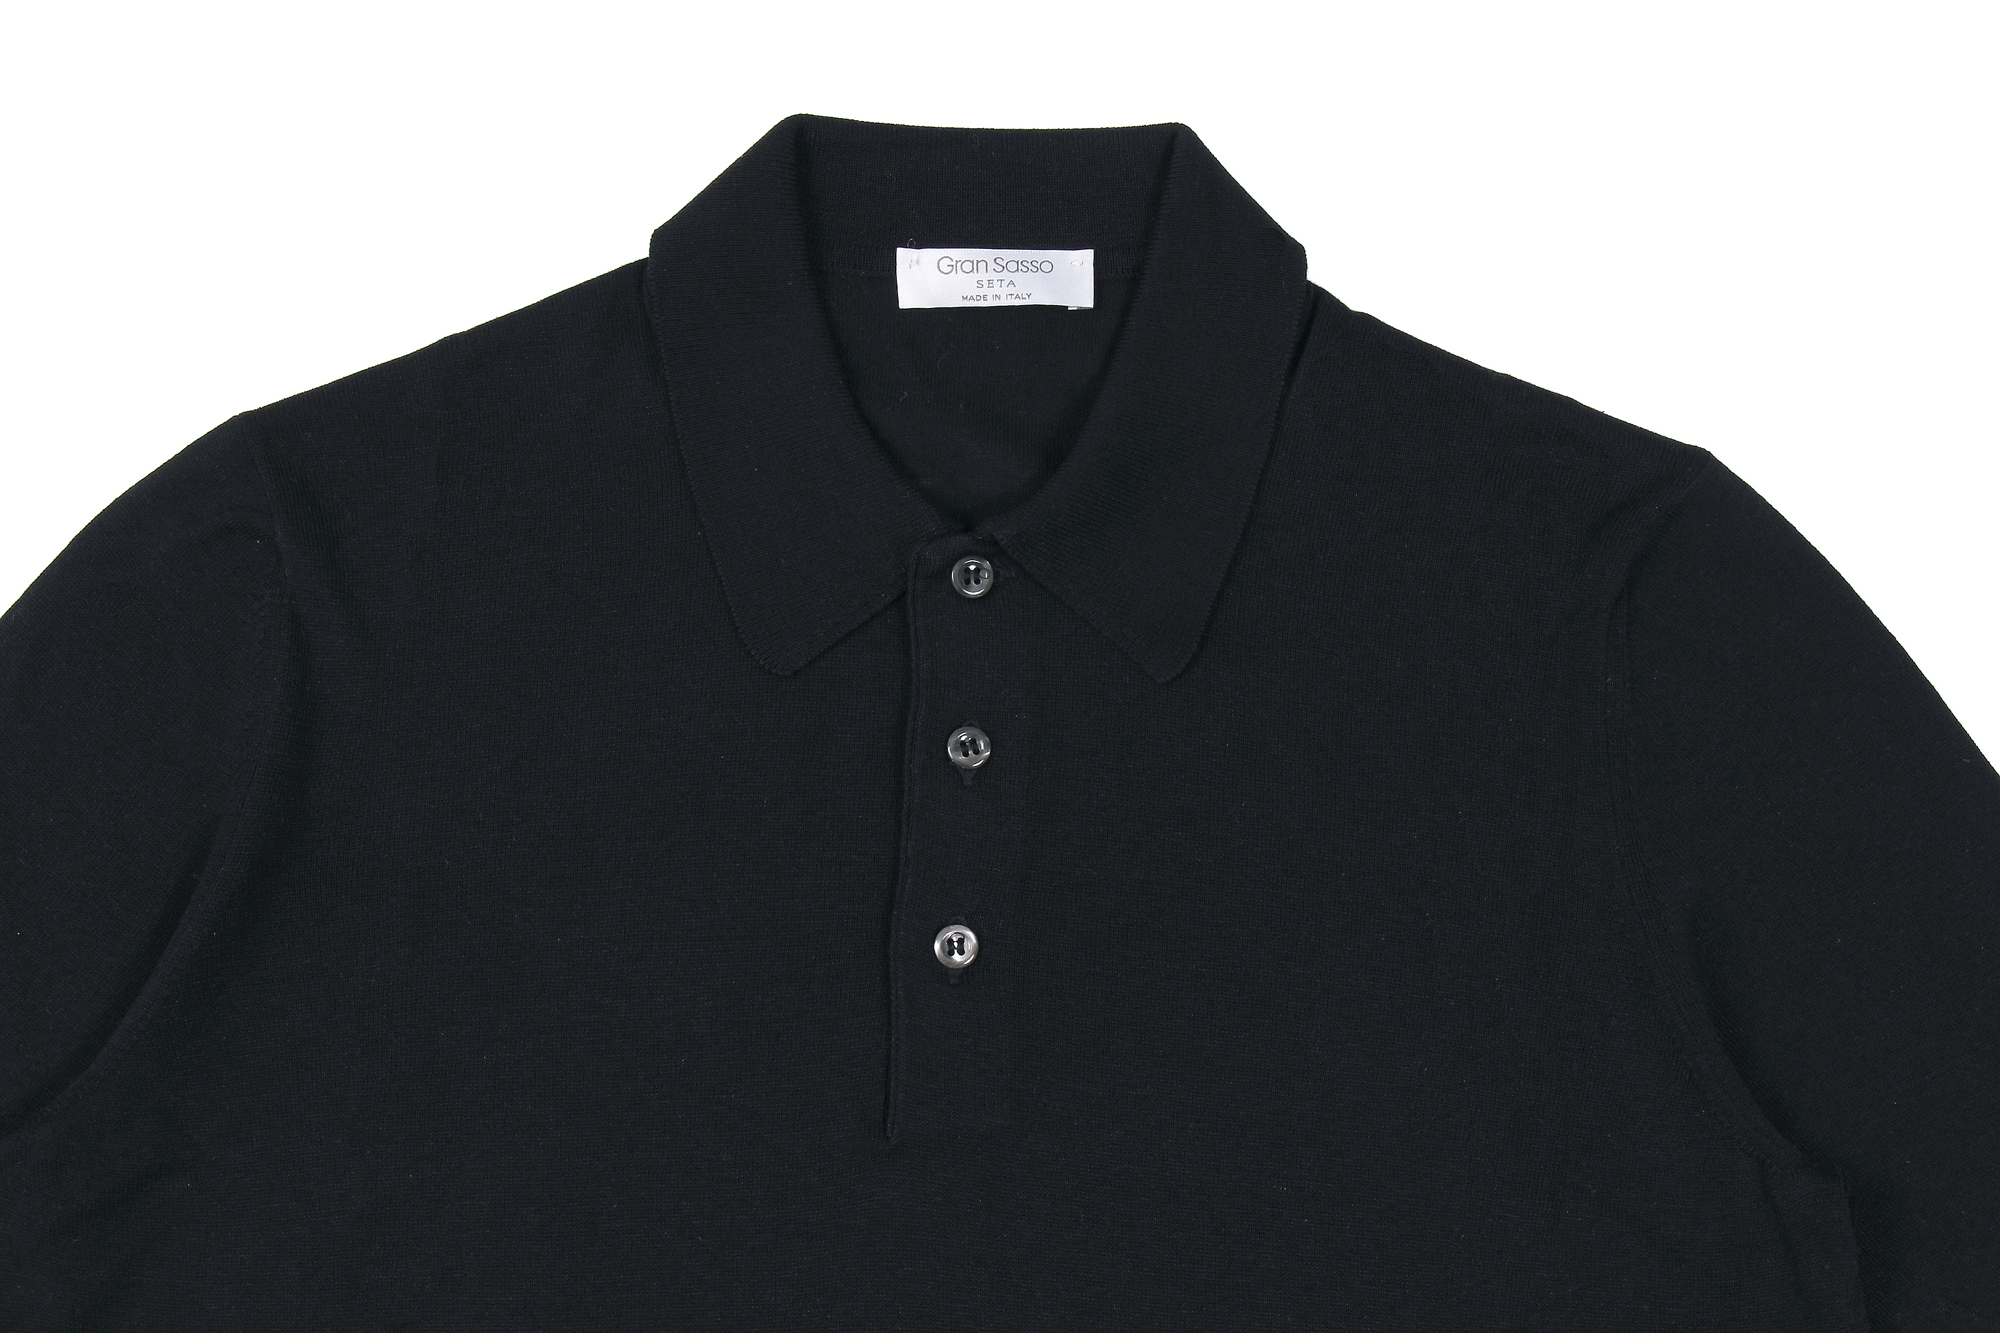 Gran Sasso (グランサッソ) Silk Knit Polo Shirt (シルクニットポロシャツ) SETA (シルク 100%) シルク ニット ポロシャツ BLACK (ブラック・099) made in italy (イタリア製) 2020 春夏新作 【入荷しました】【フリー分発売開始】 愛知 名古屋 altoediritto アルトエデリット 